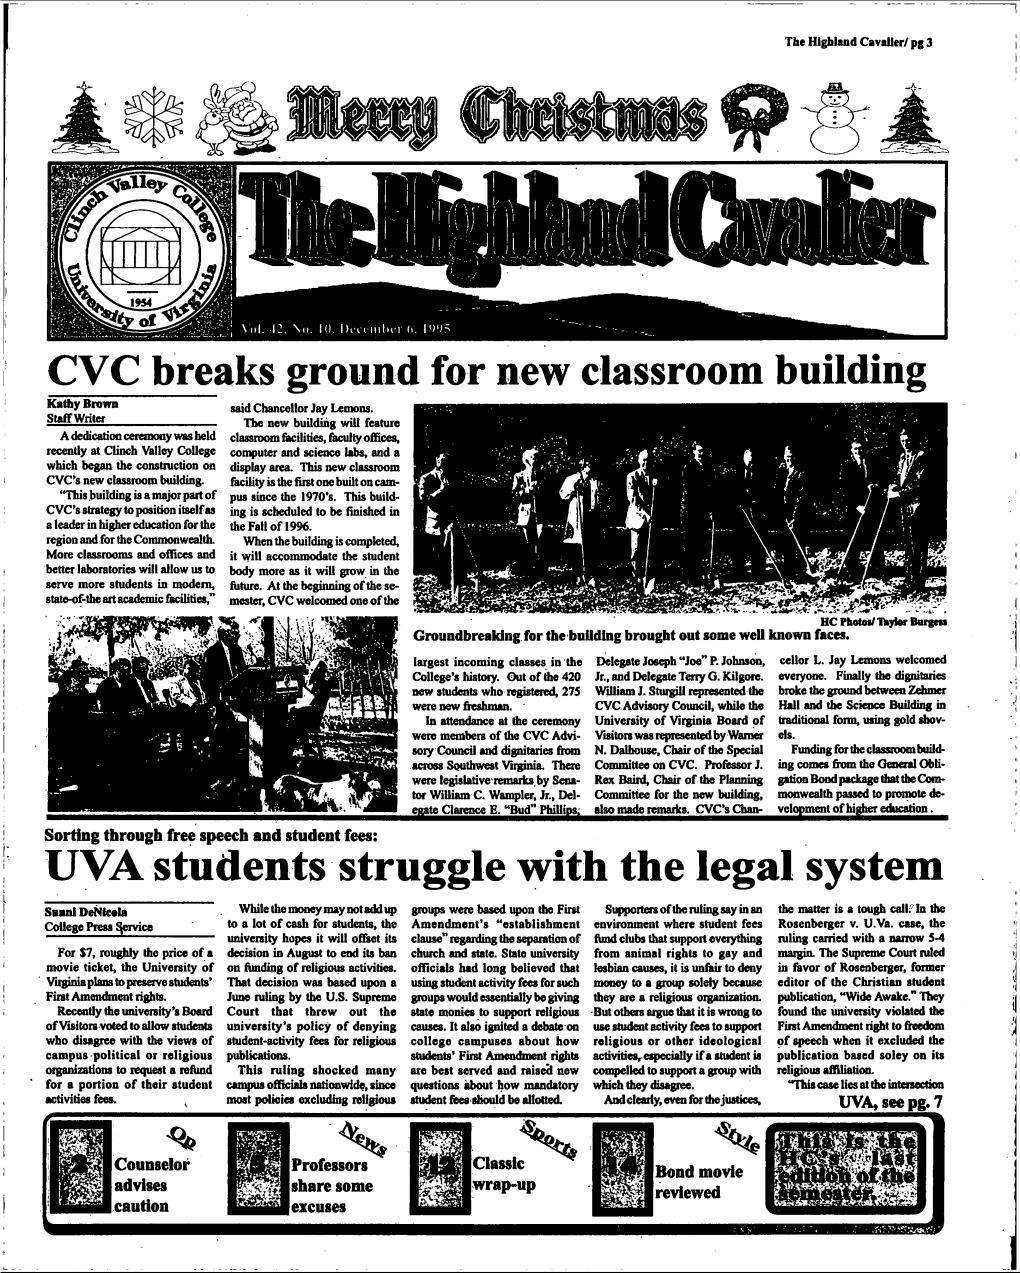 CVC Breaks Ground for New Classroom Building UVA Students